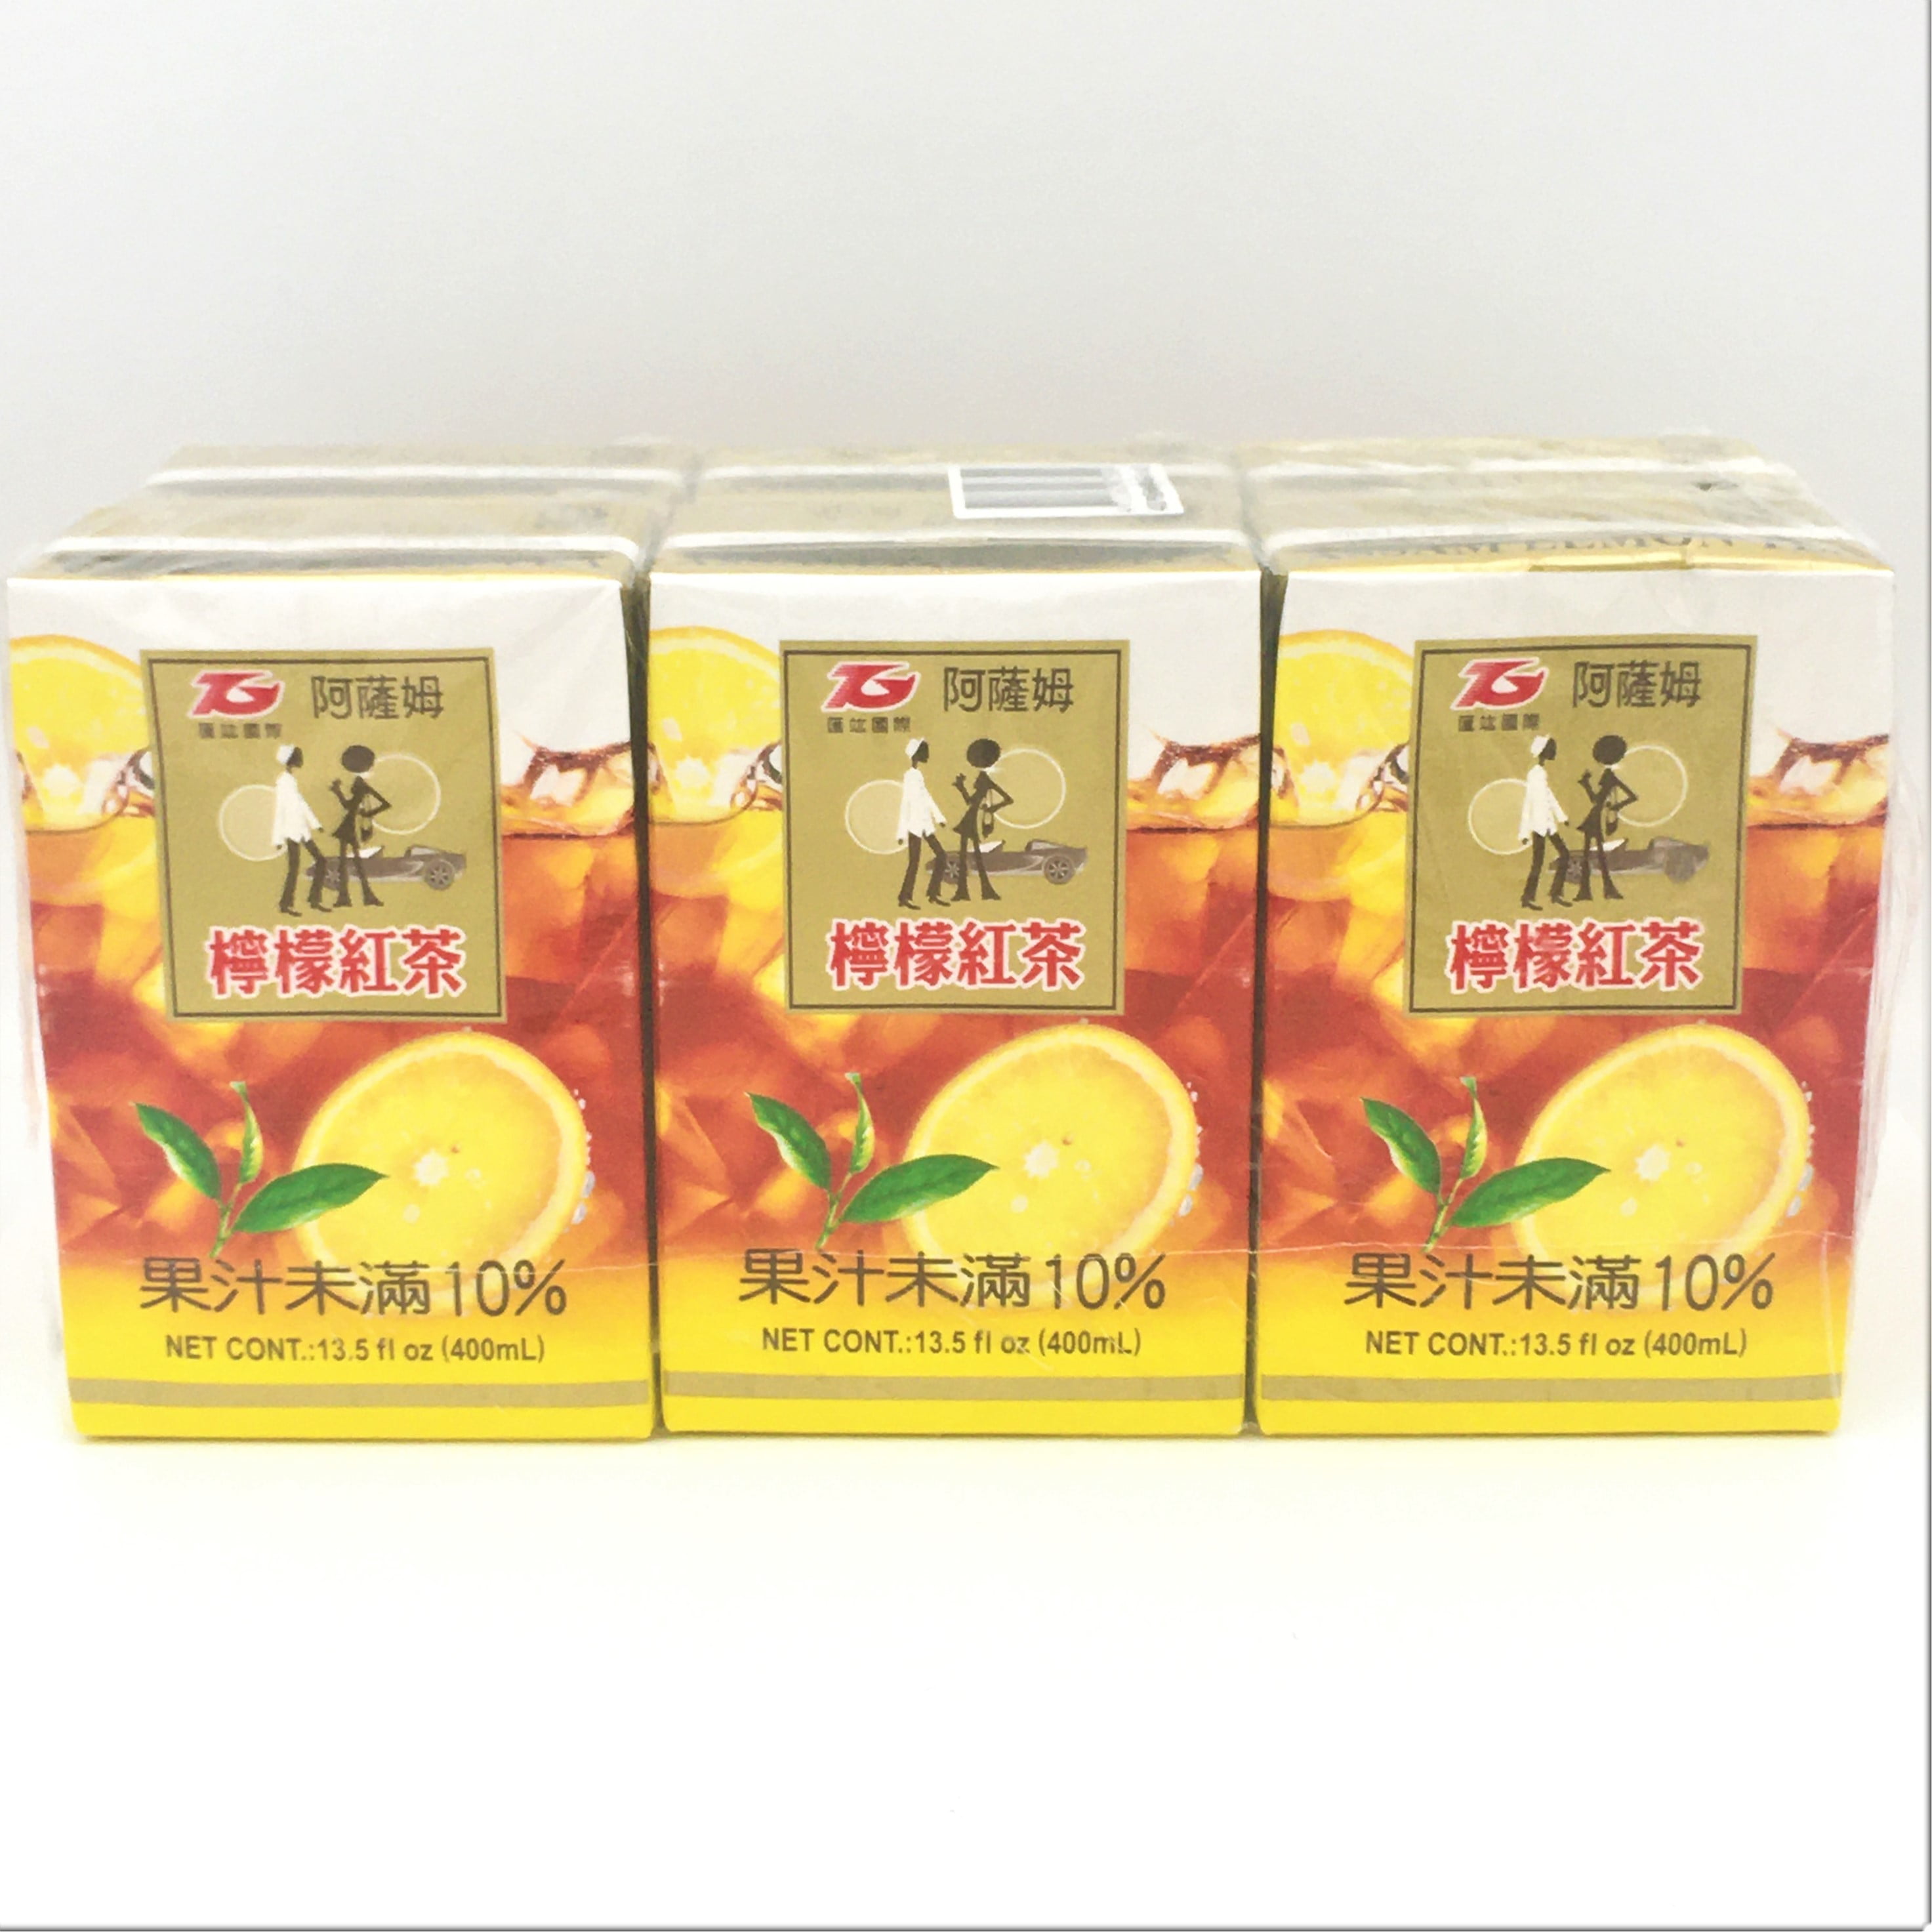 Assam - Peach Tea - 19.6 oz